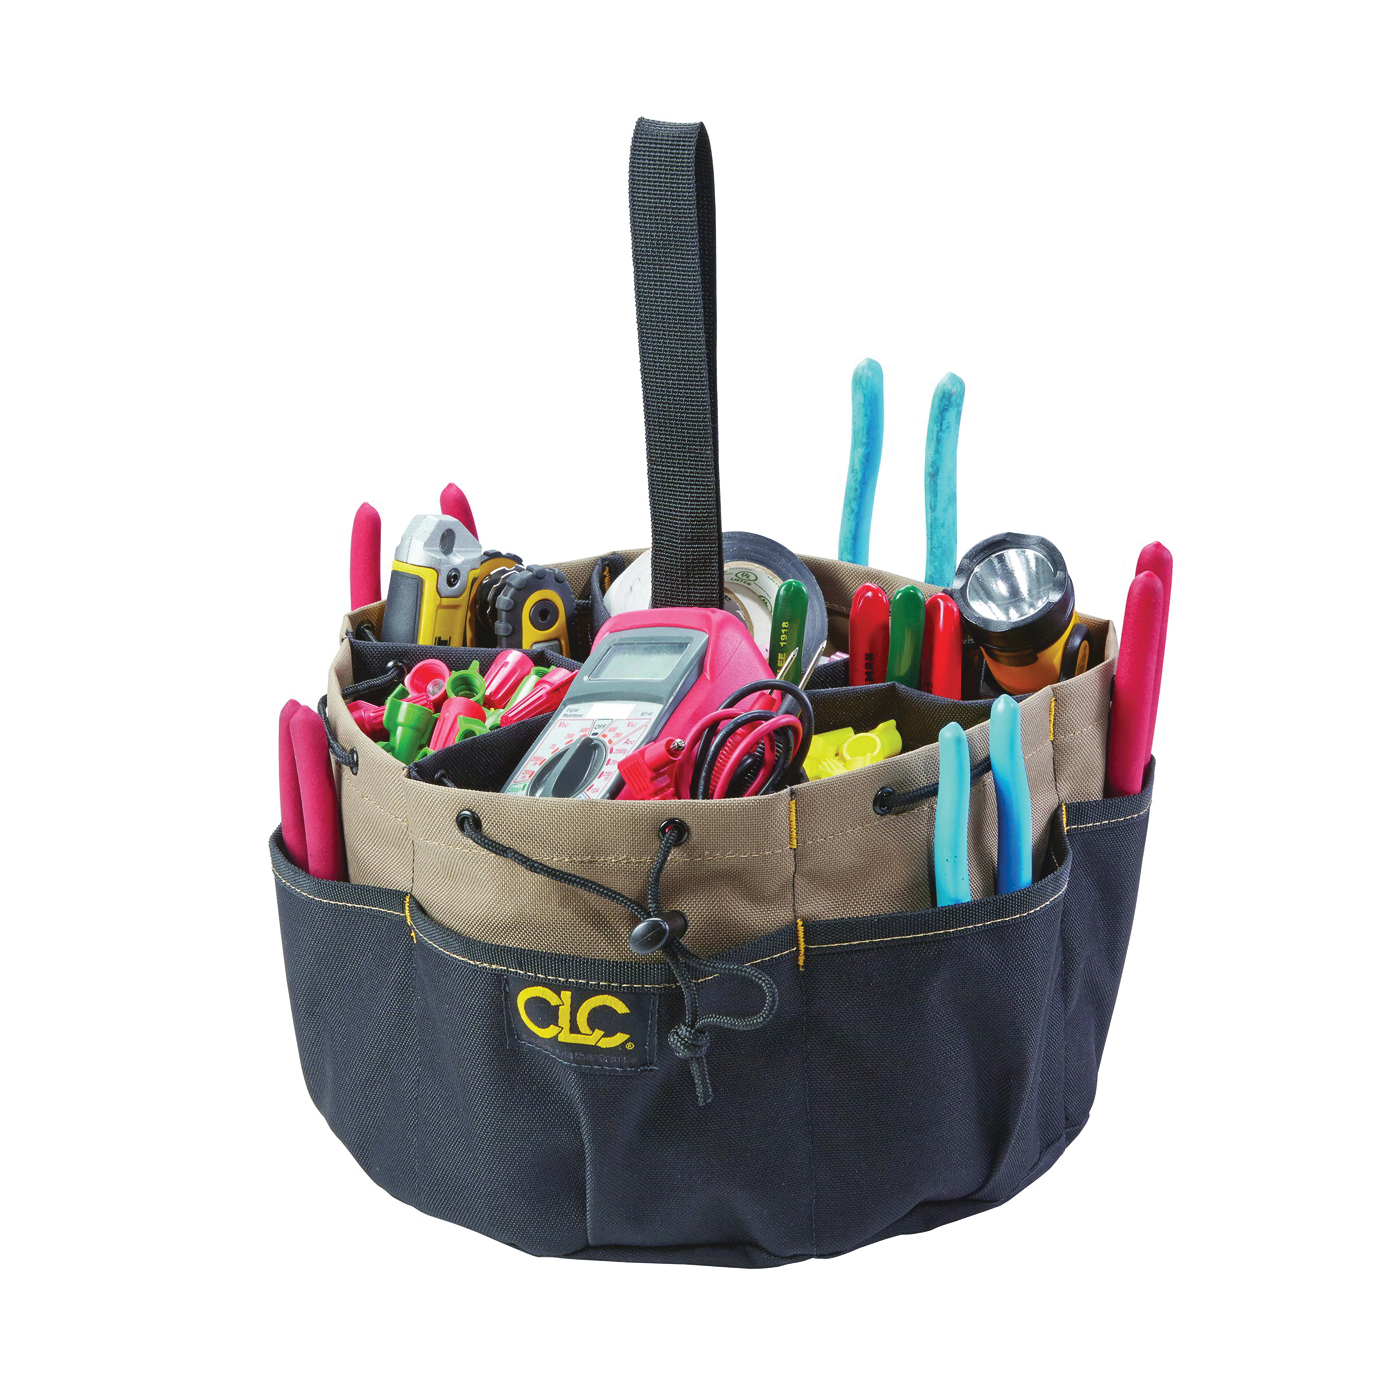 CLC Tool Works BUCKETBAG Series 1148 Bucket Tool Bag, 7 i